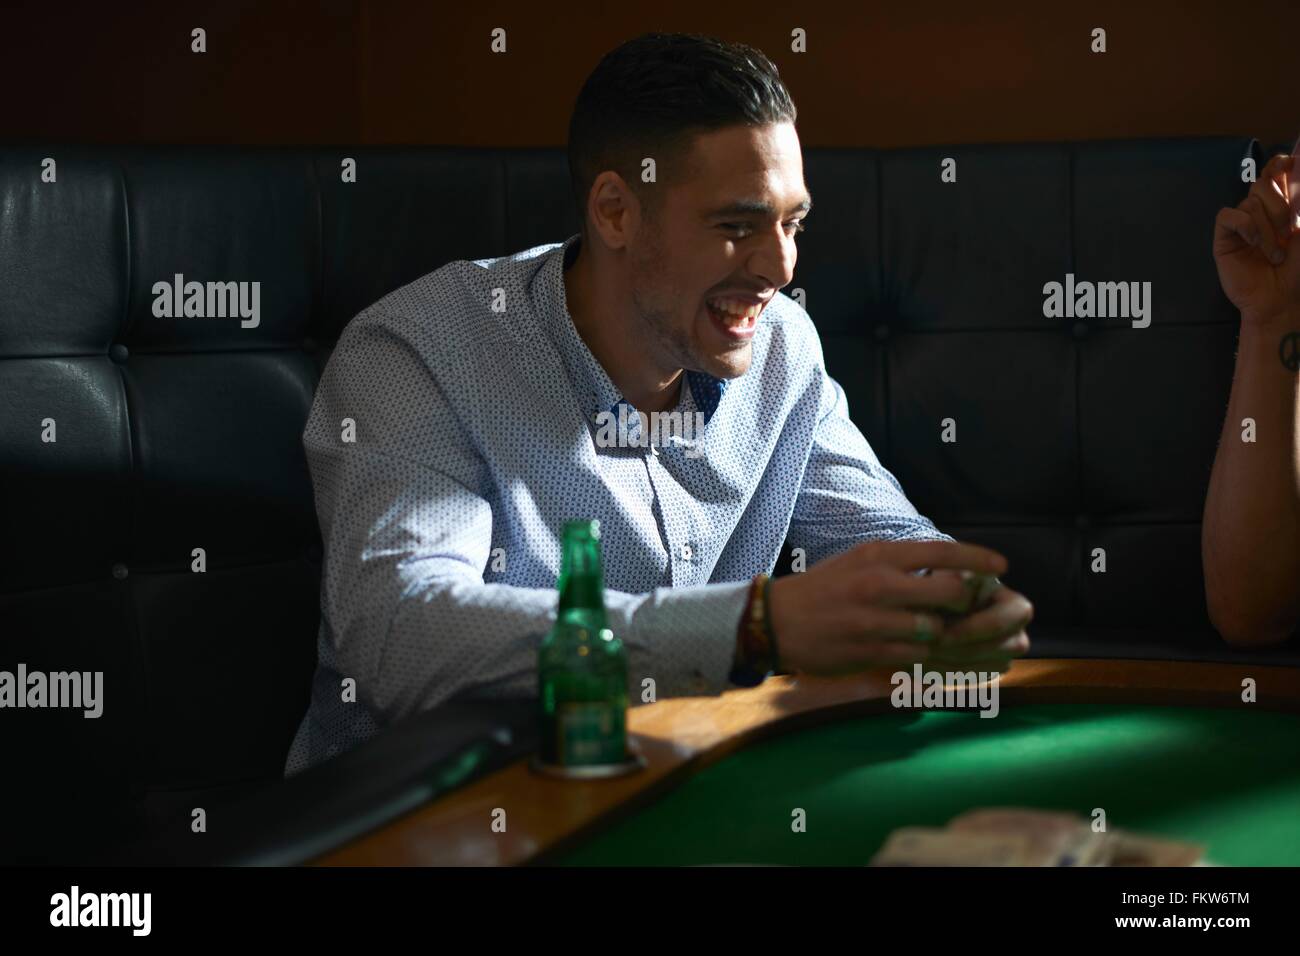 Man shuffling playing cards at pub card table Stock Photo